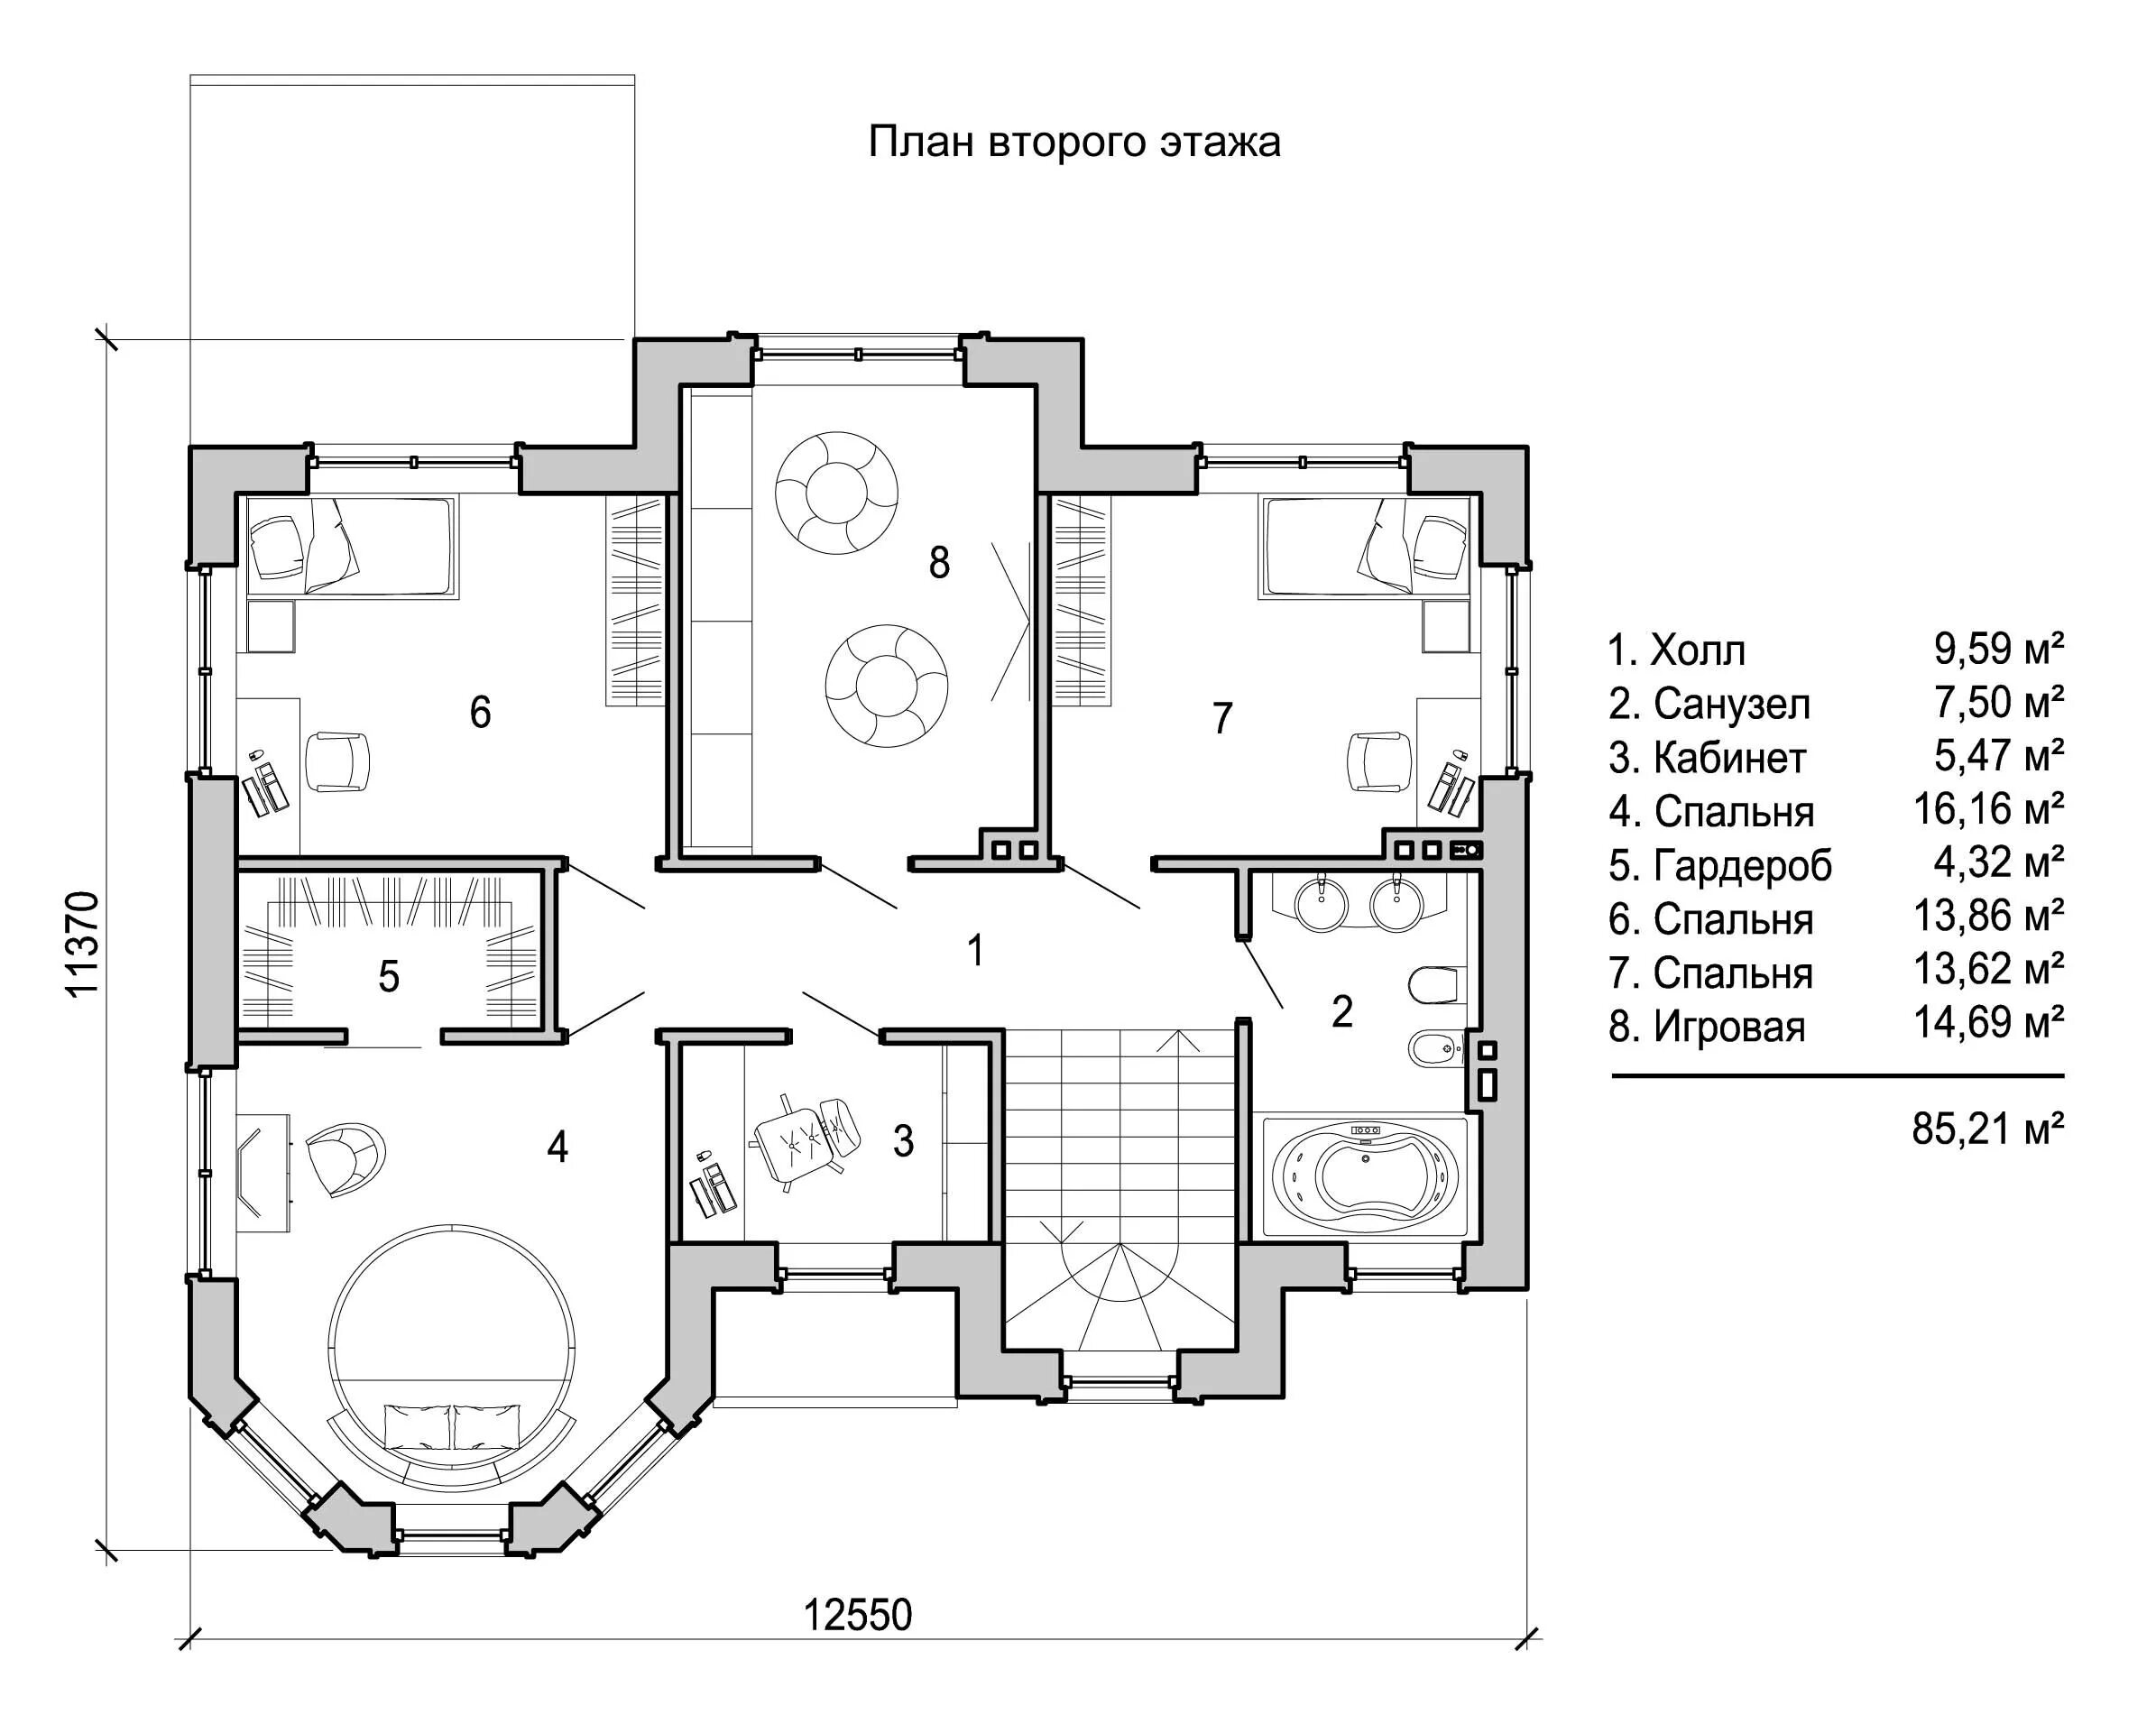 Схема коттеджа двухэтажного. Чертеж двухэтажного коттеджа с размерами. Чертеж дом 2 этажа. План двухэтажного дома чертеж. Главное на втором плане